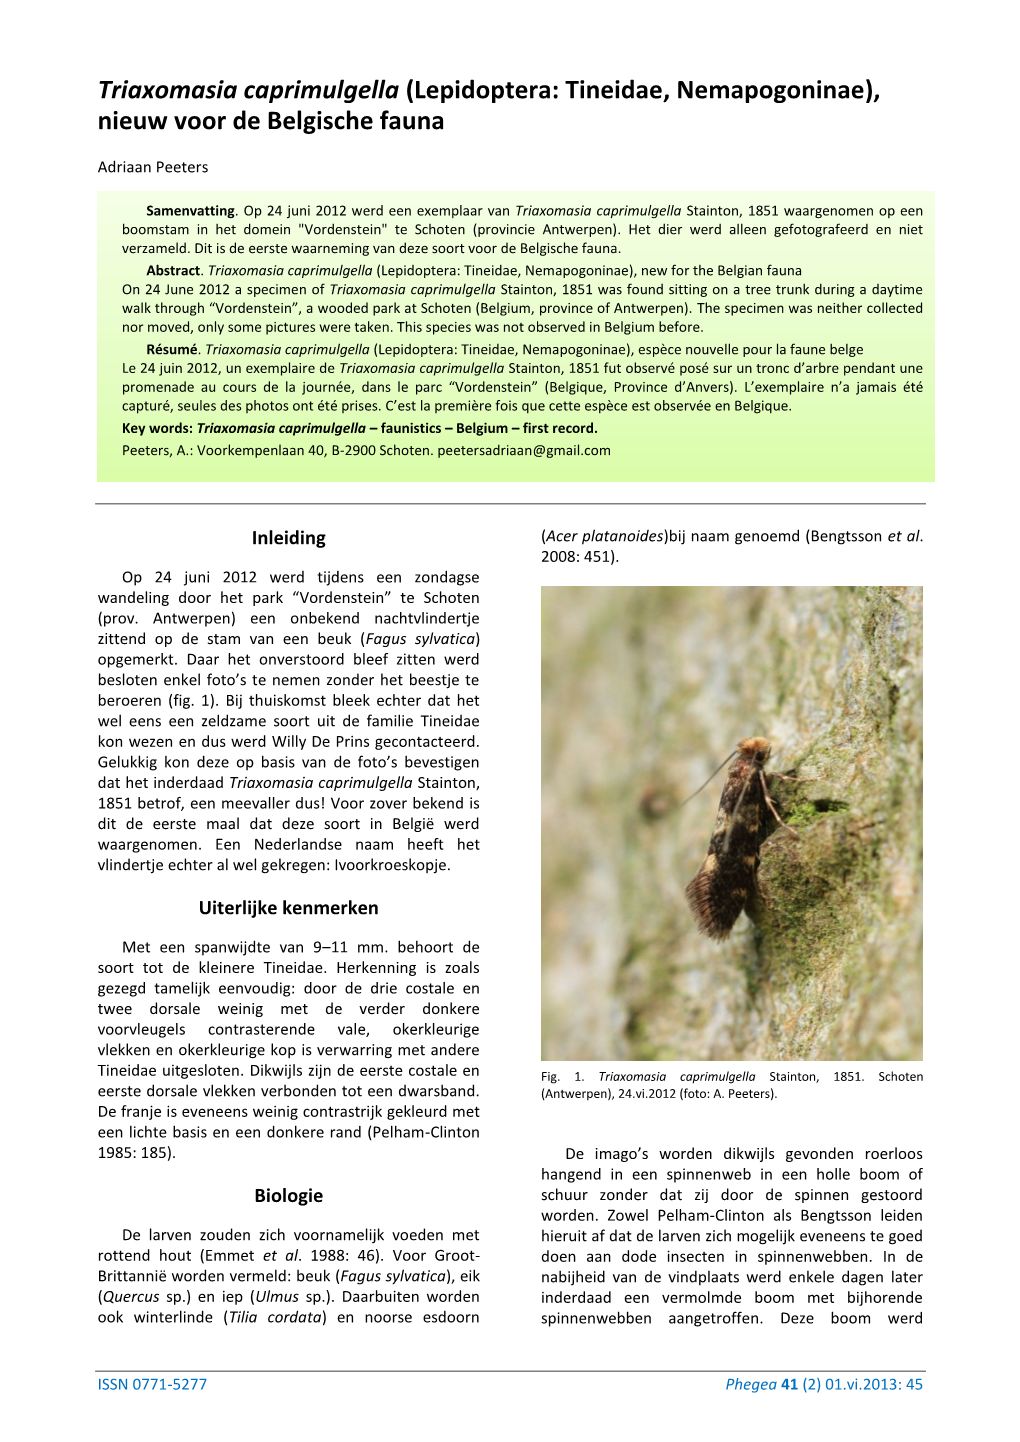 Triaxomasia Caprimulgella (Lepidoptera: Tineidae, Nemapogoninae), Nieuw Voor De Belgische Fauna